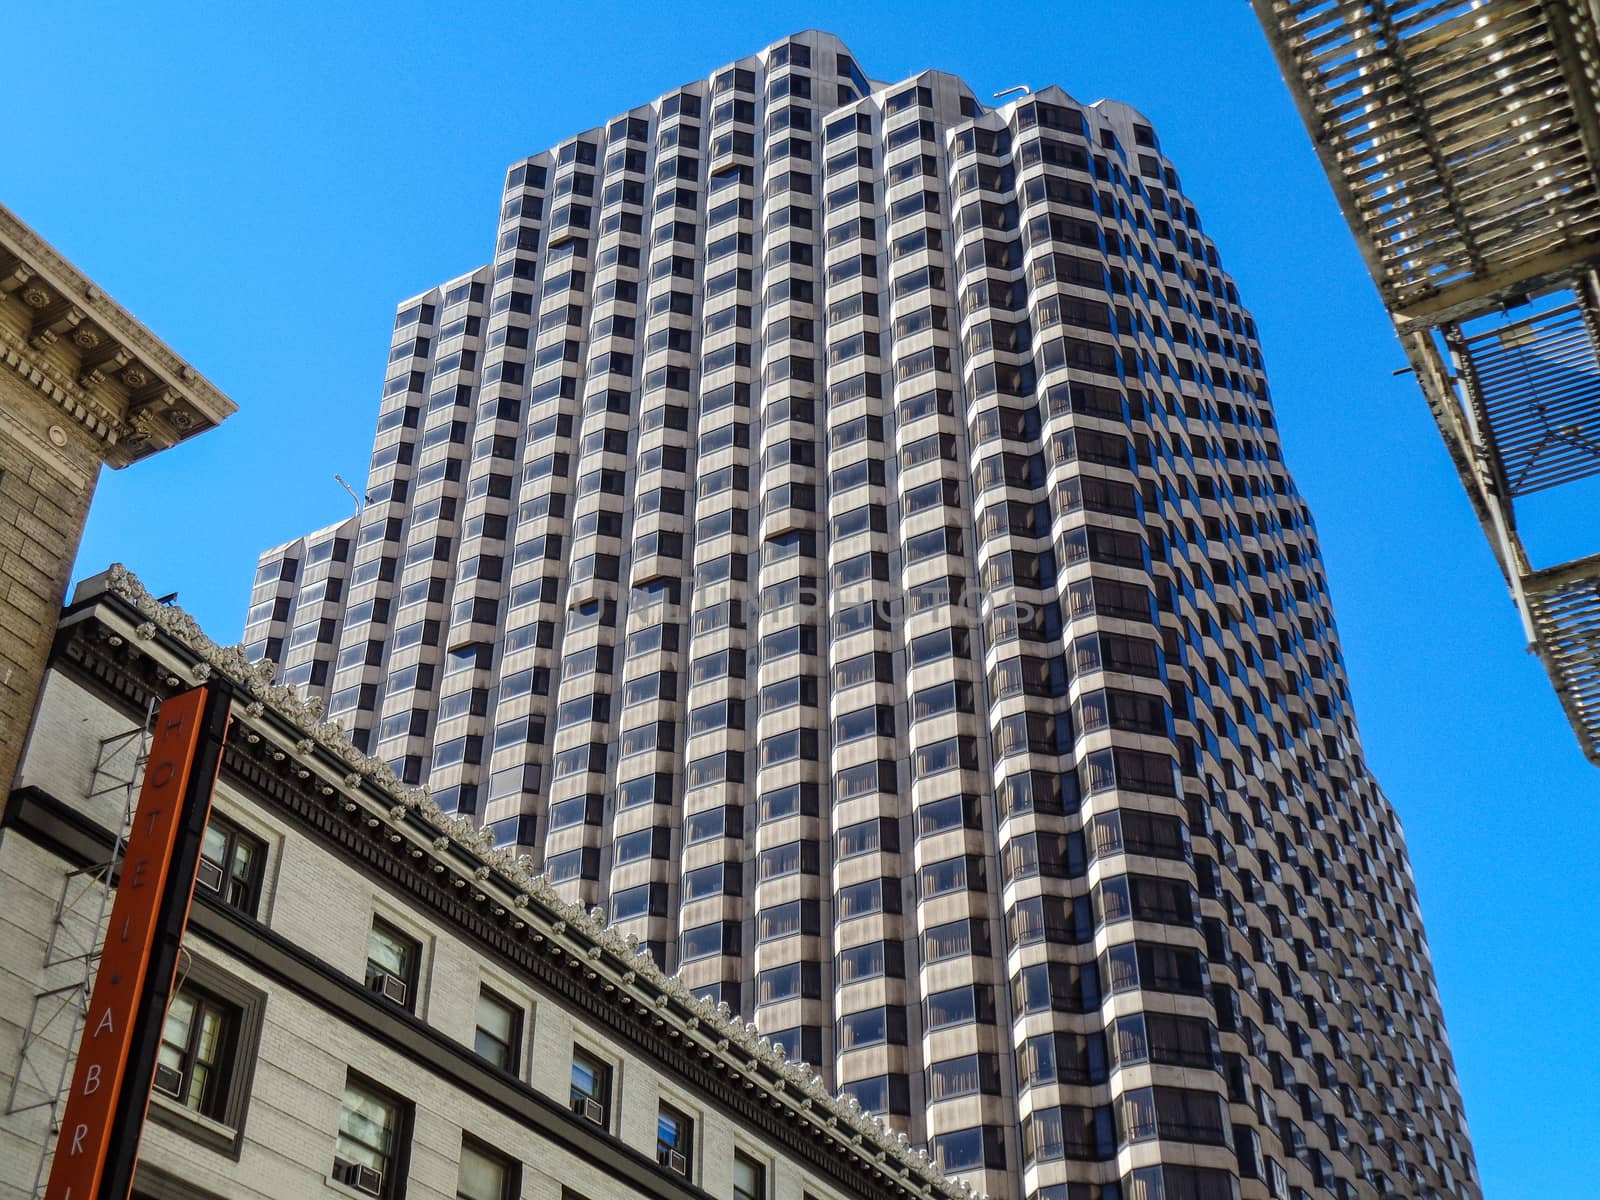 skyscraper in San Francisco by Tevion25